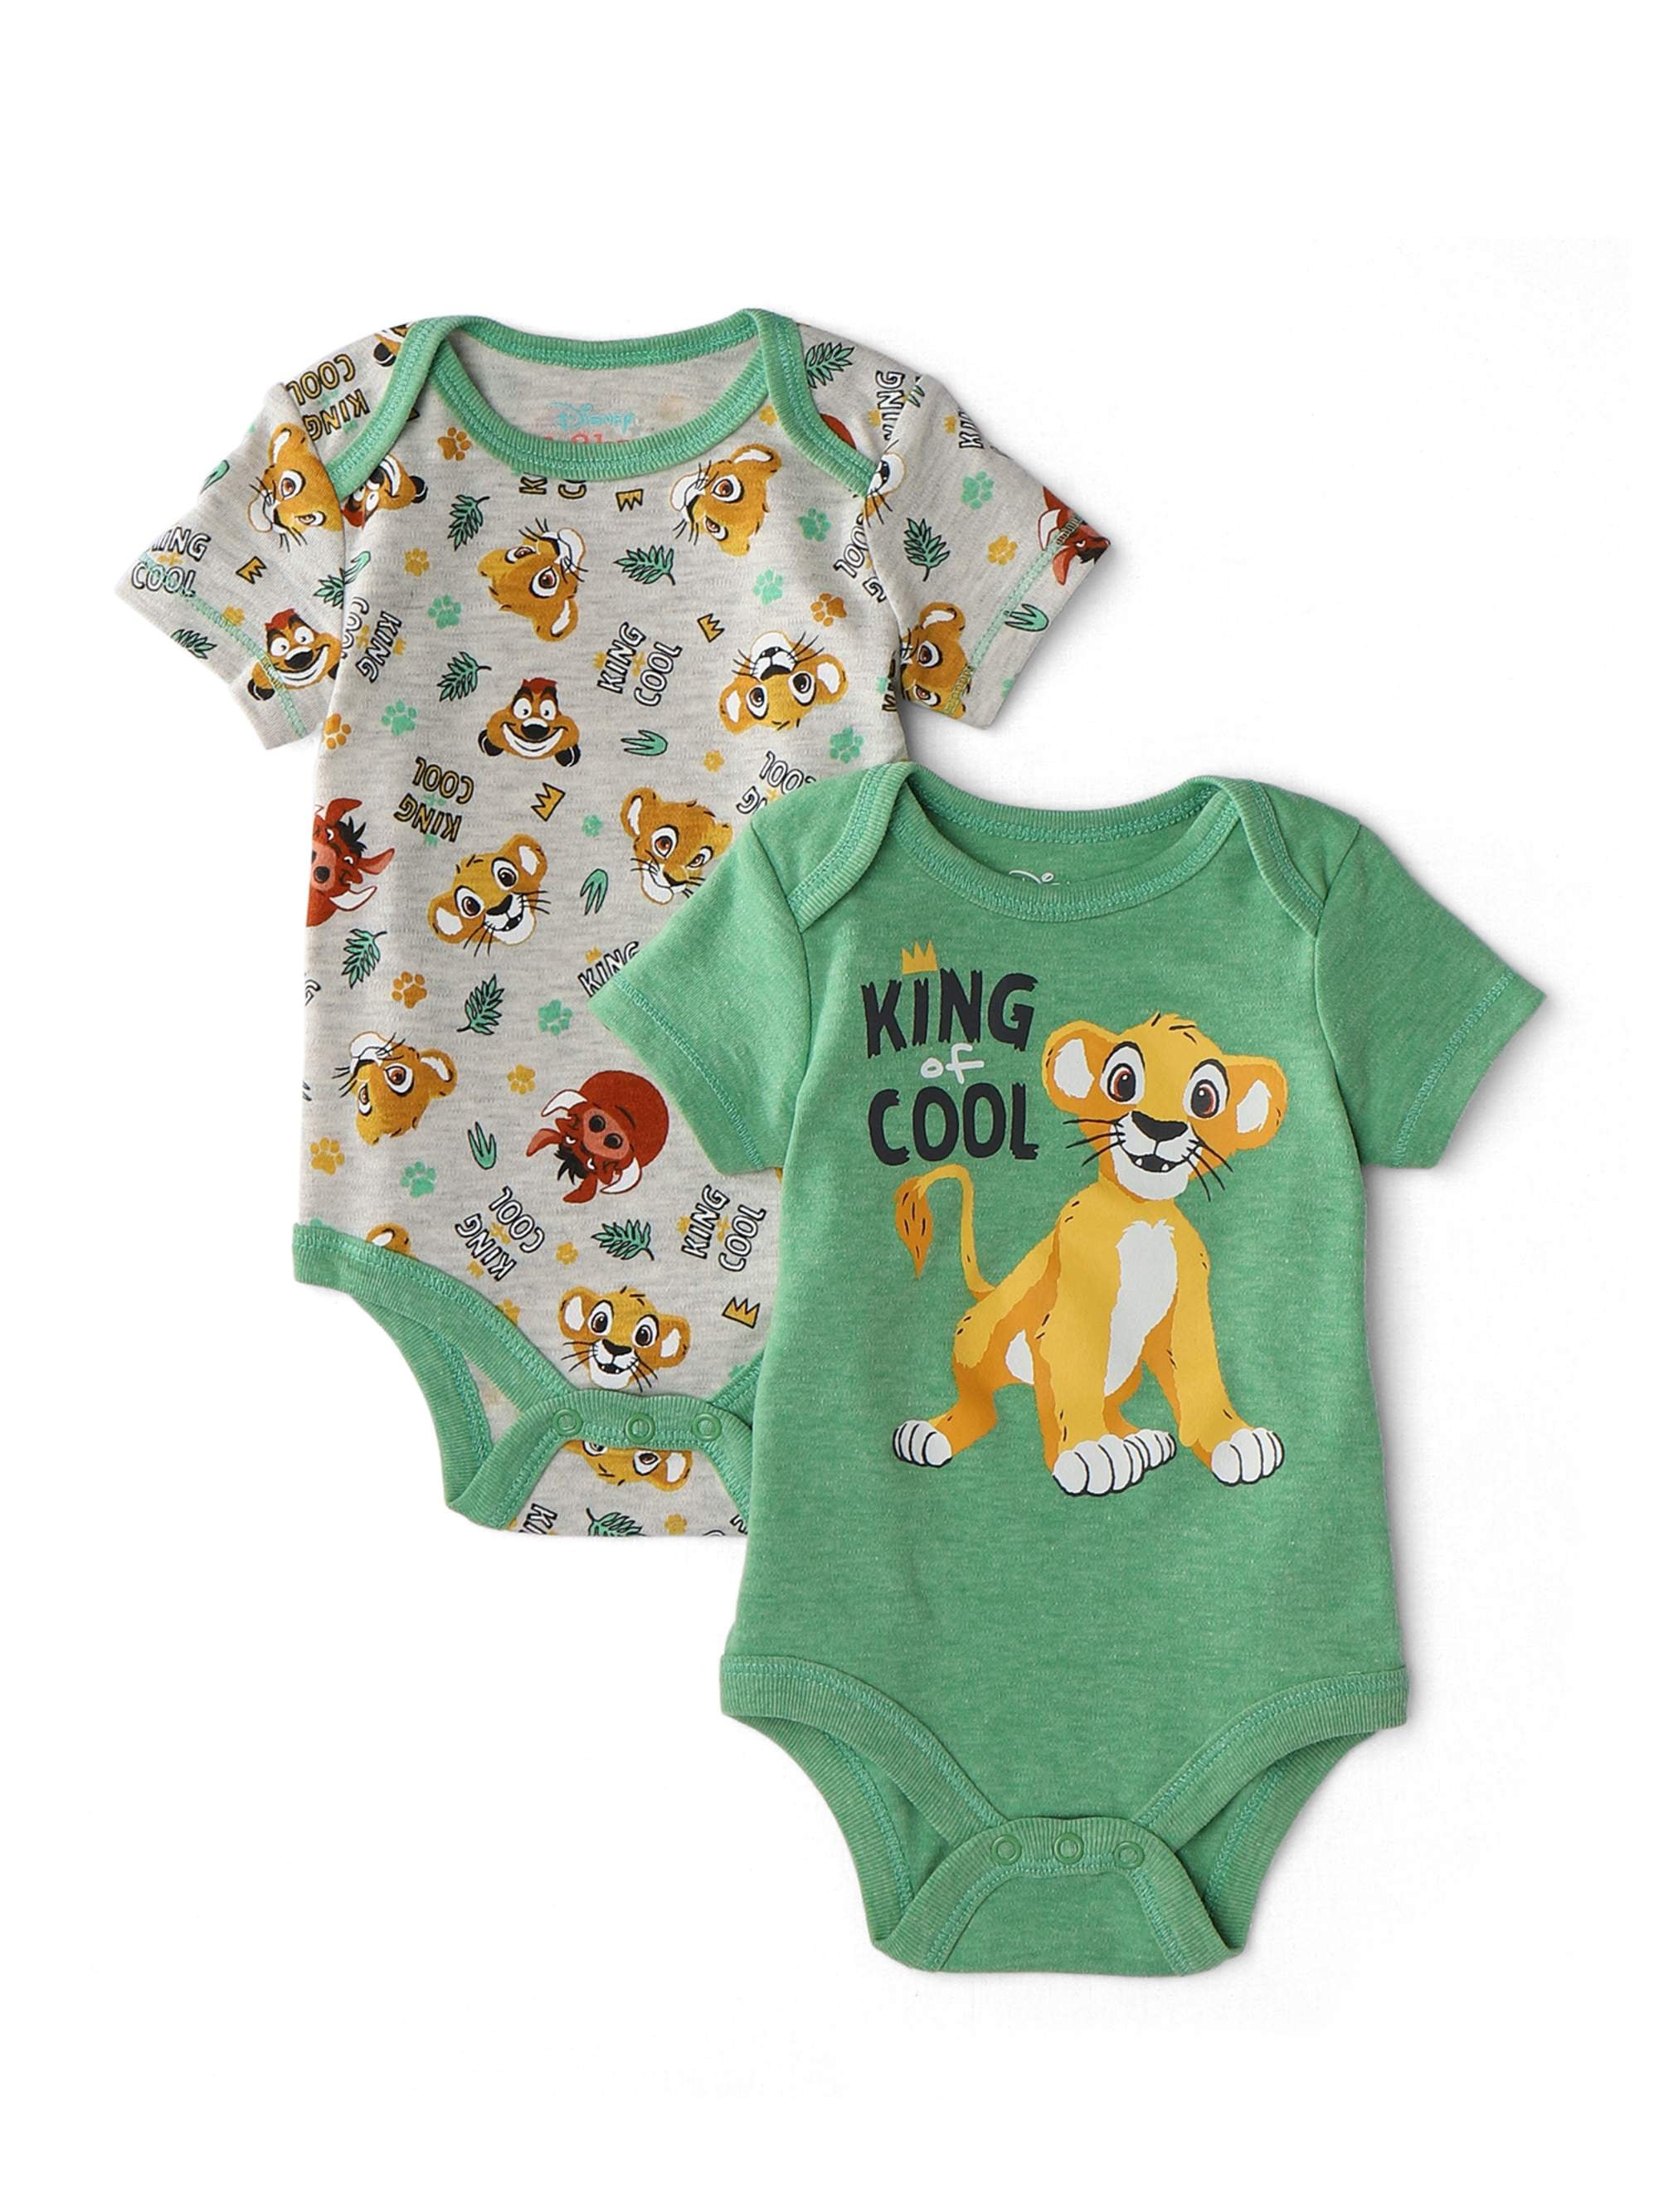 Lion King Baby Boy Graphic Bodysuits, 2 